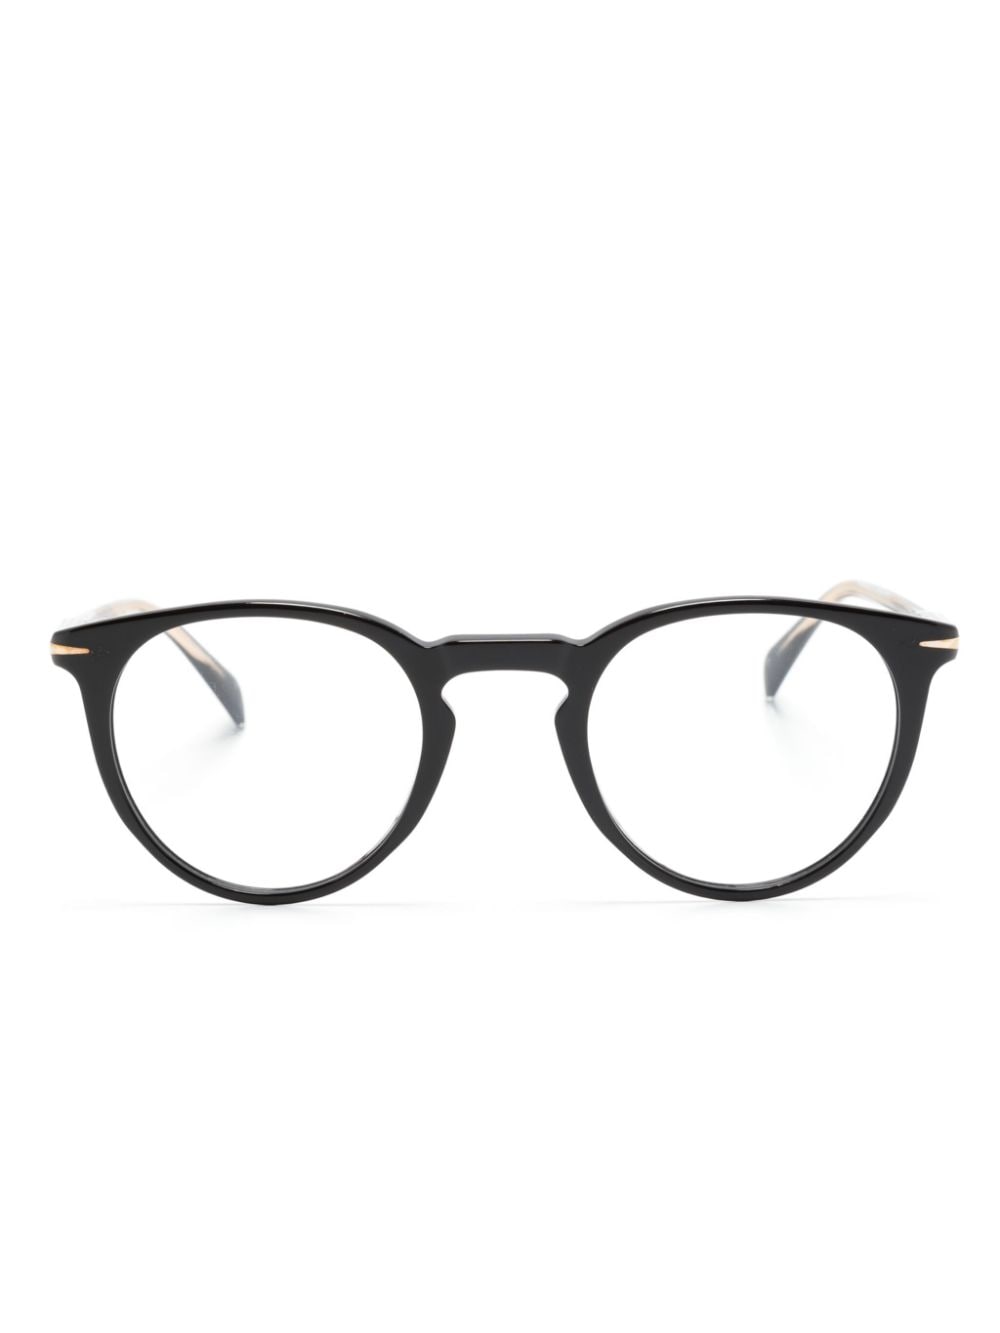 Eyewear by David Beckham round-frame glasses - Black von Eyewear by David Beckham